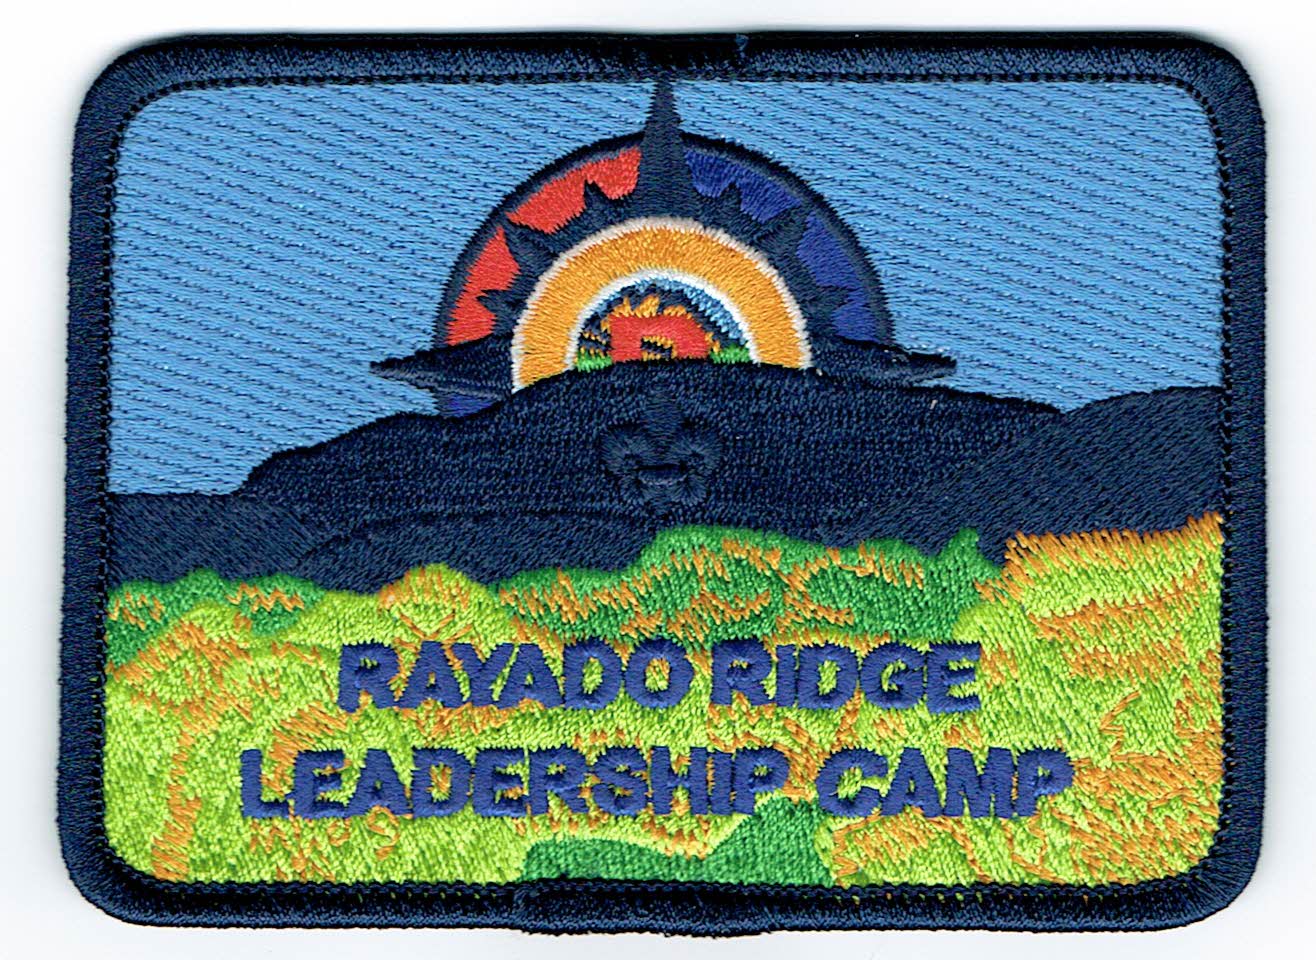 Rayado Ridge Leadership Camp patch image